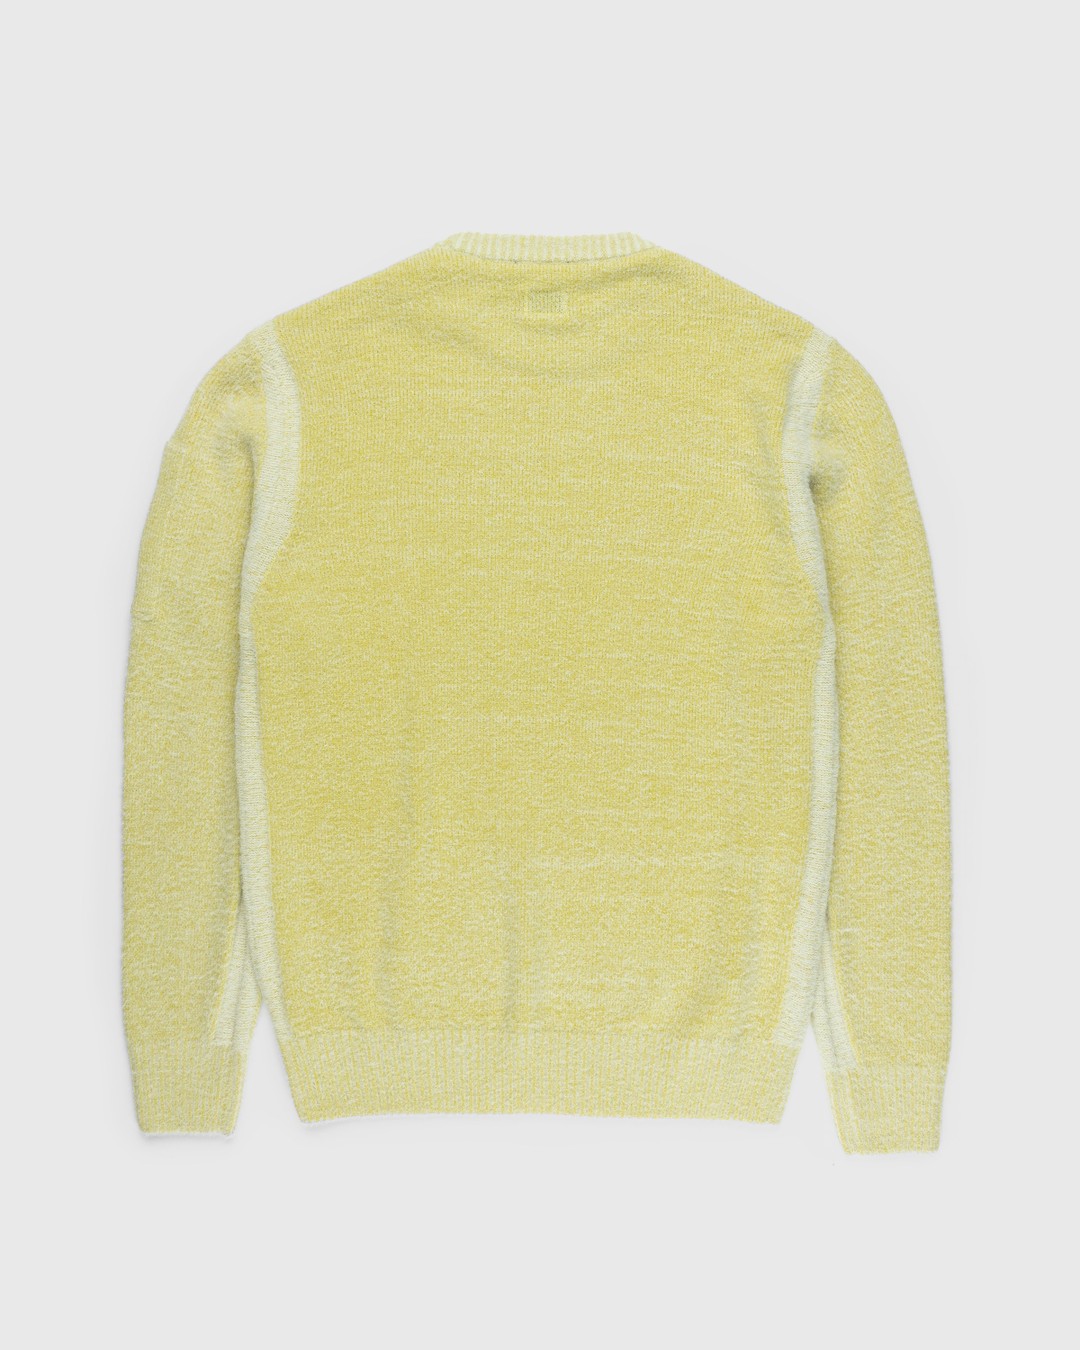 C.P. Company – Fleece Knit Jumper Yellow - Crewnecks - Yellow - Image 2